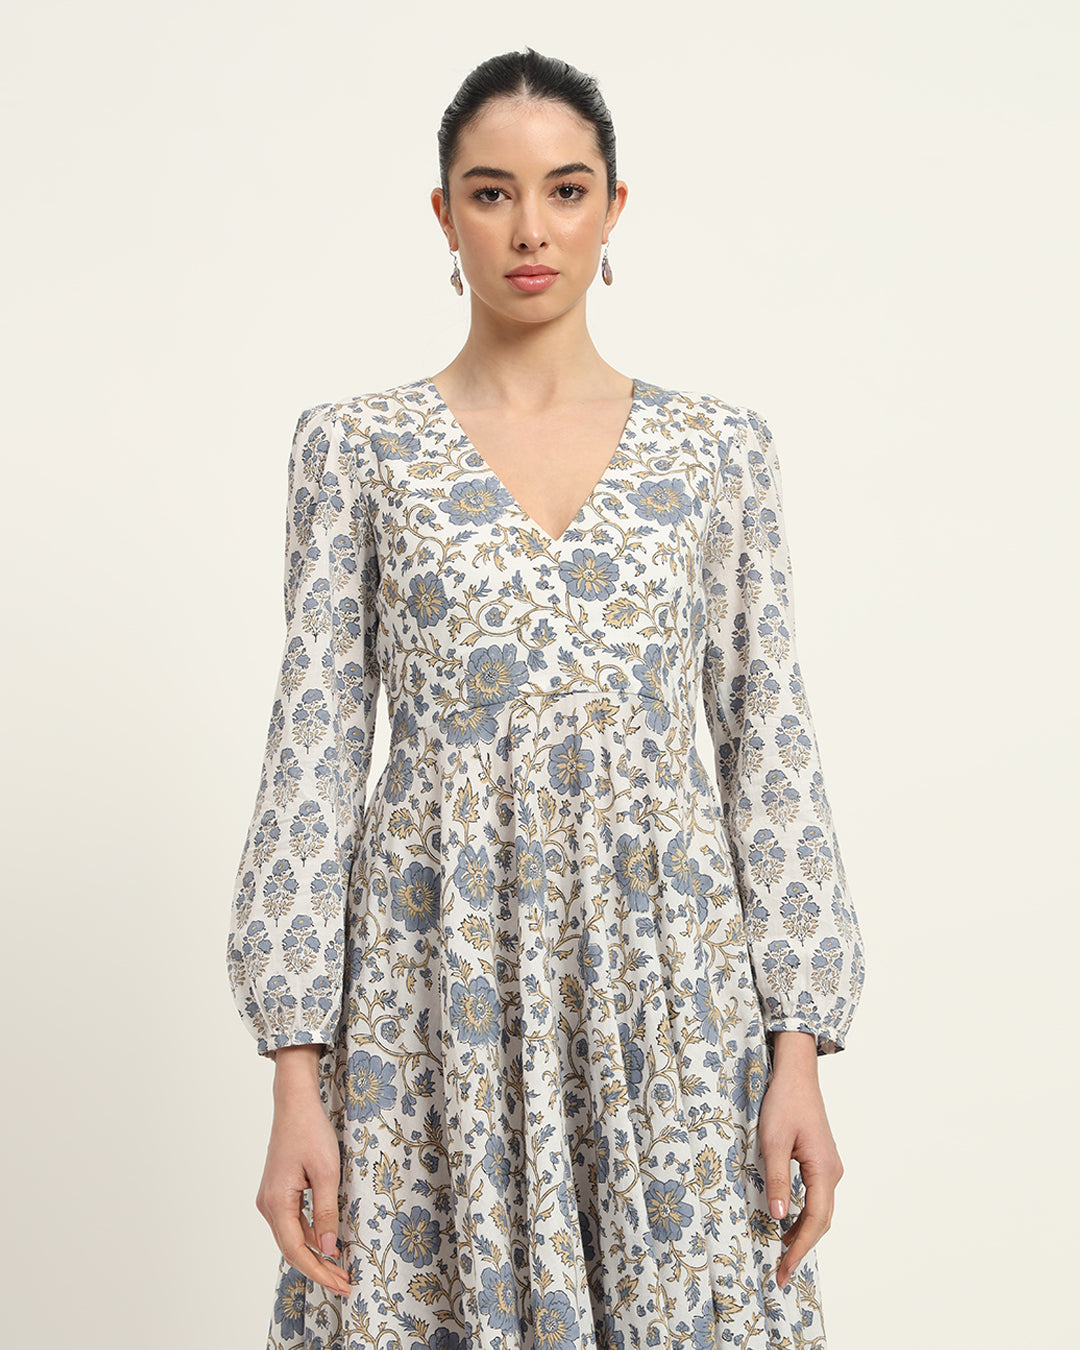 Elegance in Azure Bloom Dress